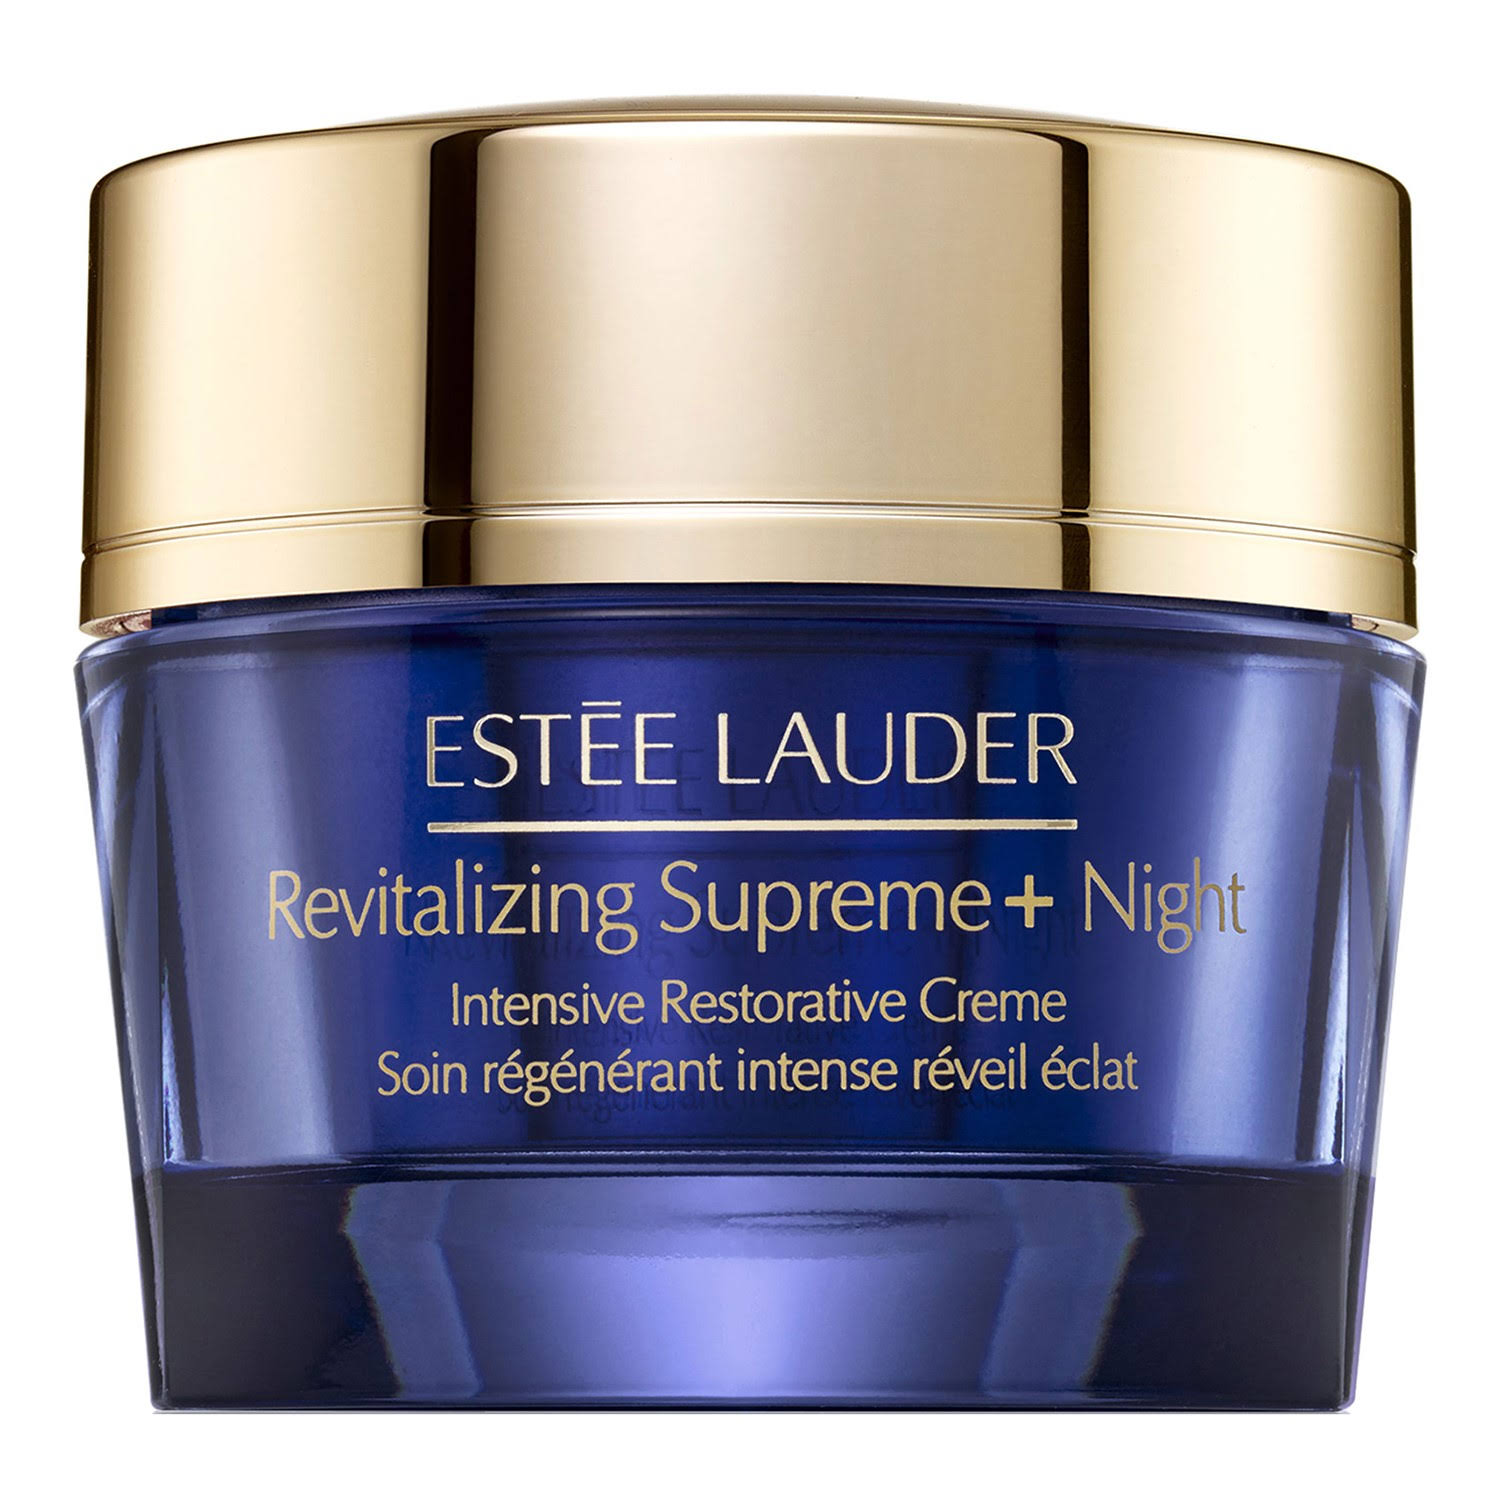 Estee Lauder Revitalizing Supreme + Night Intensive Restorative Creme 50ml